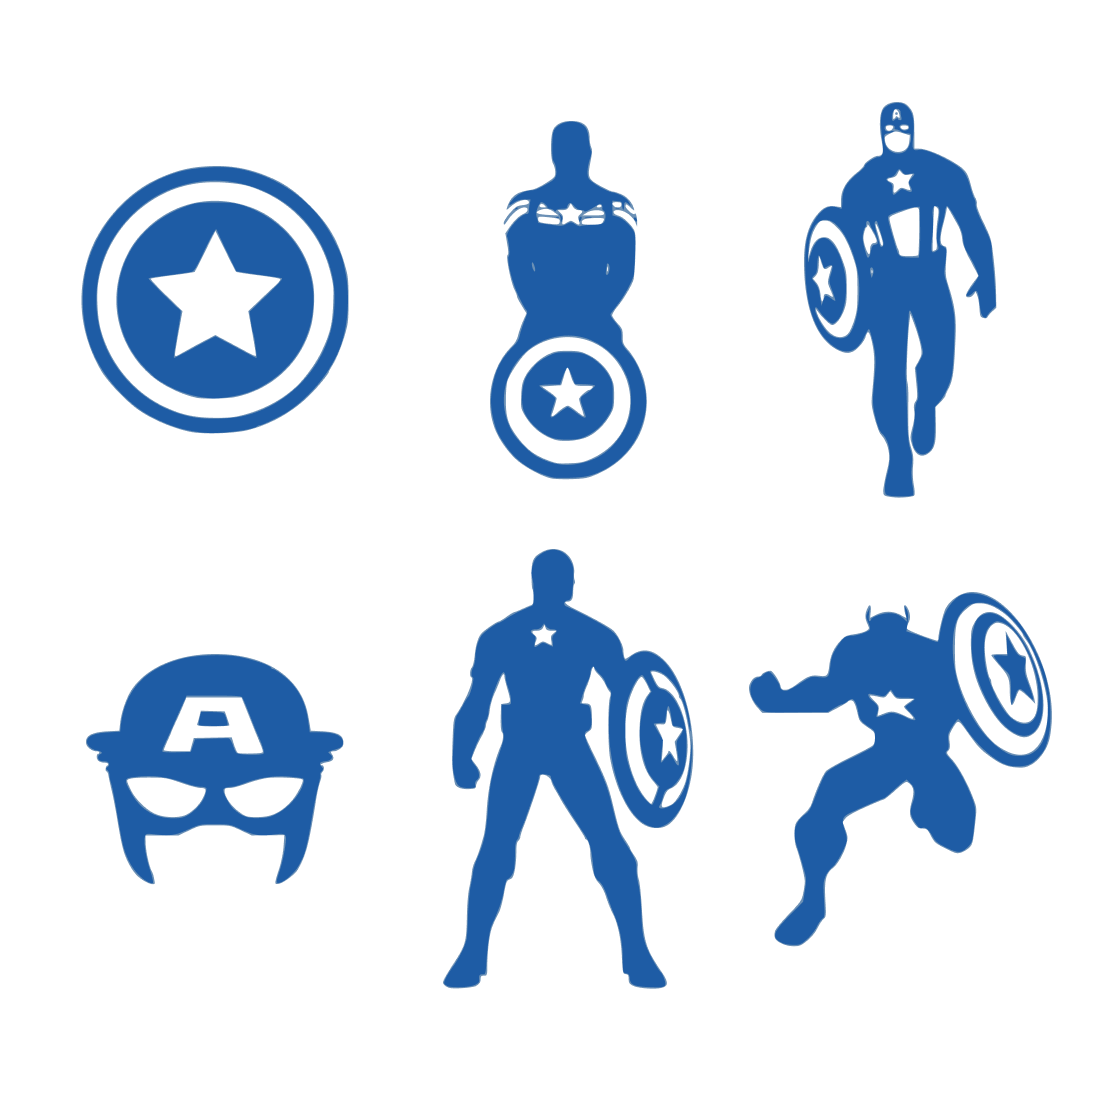 Captain America SVG_4 cover.